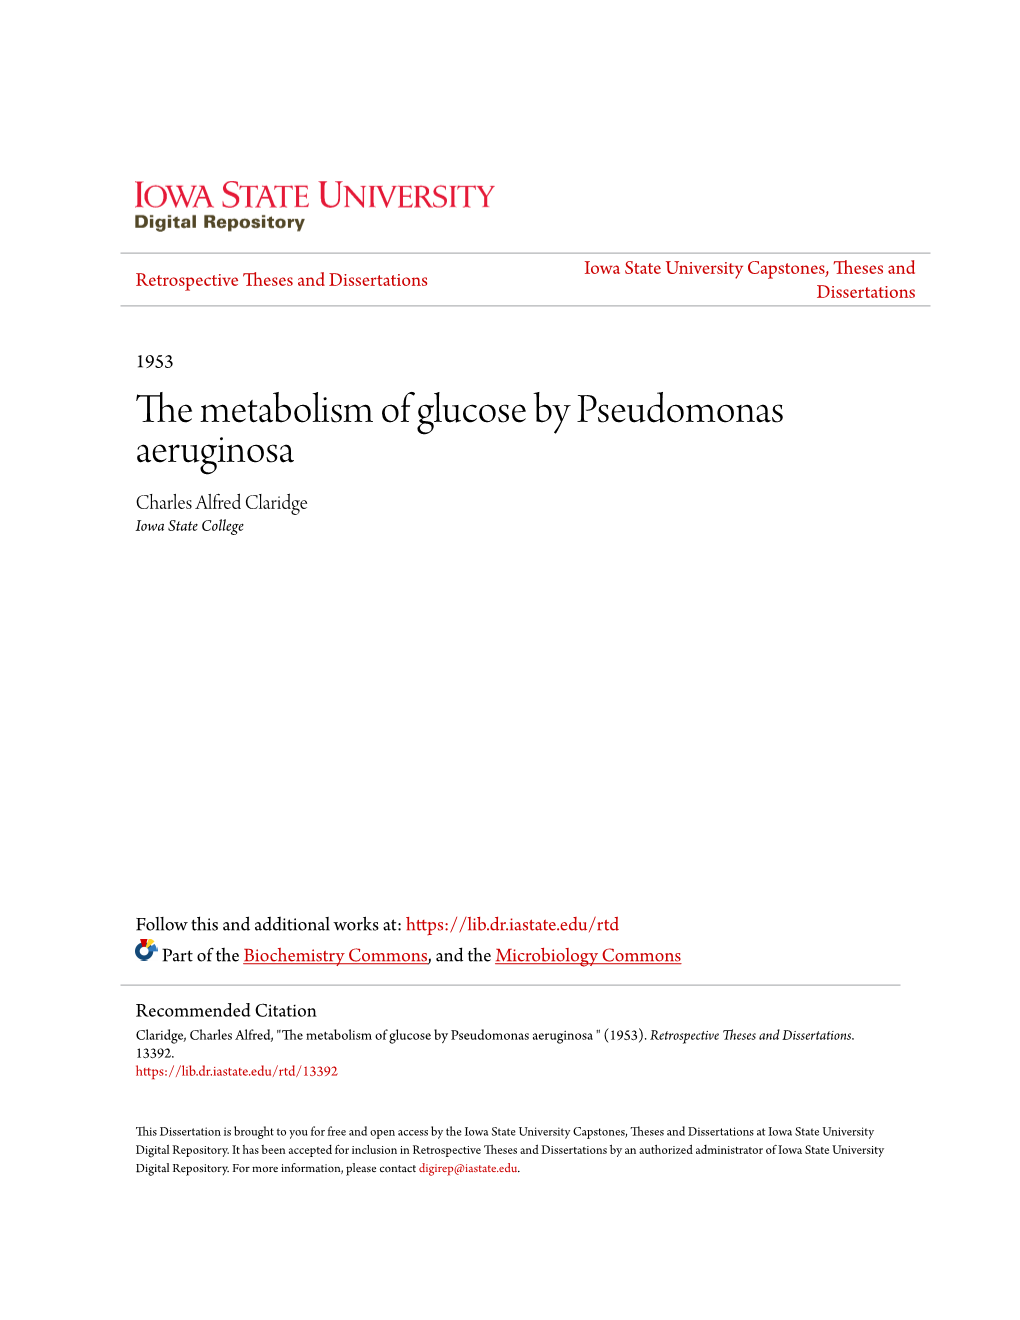 The Metabolism of Glucose by Pseudomonas Aeruginosa Charles Alfred Claridge Iowa State College